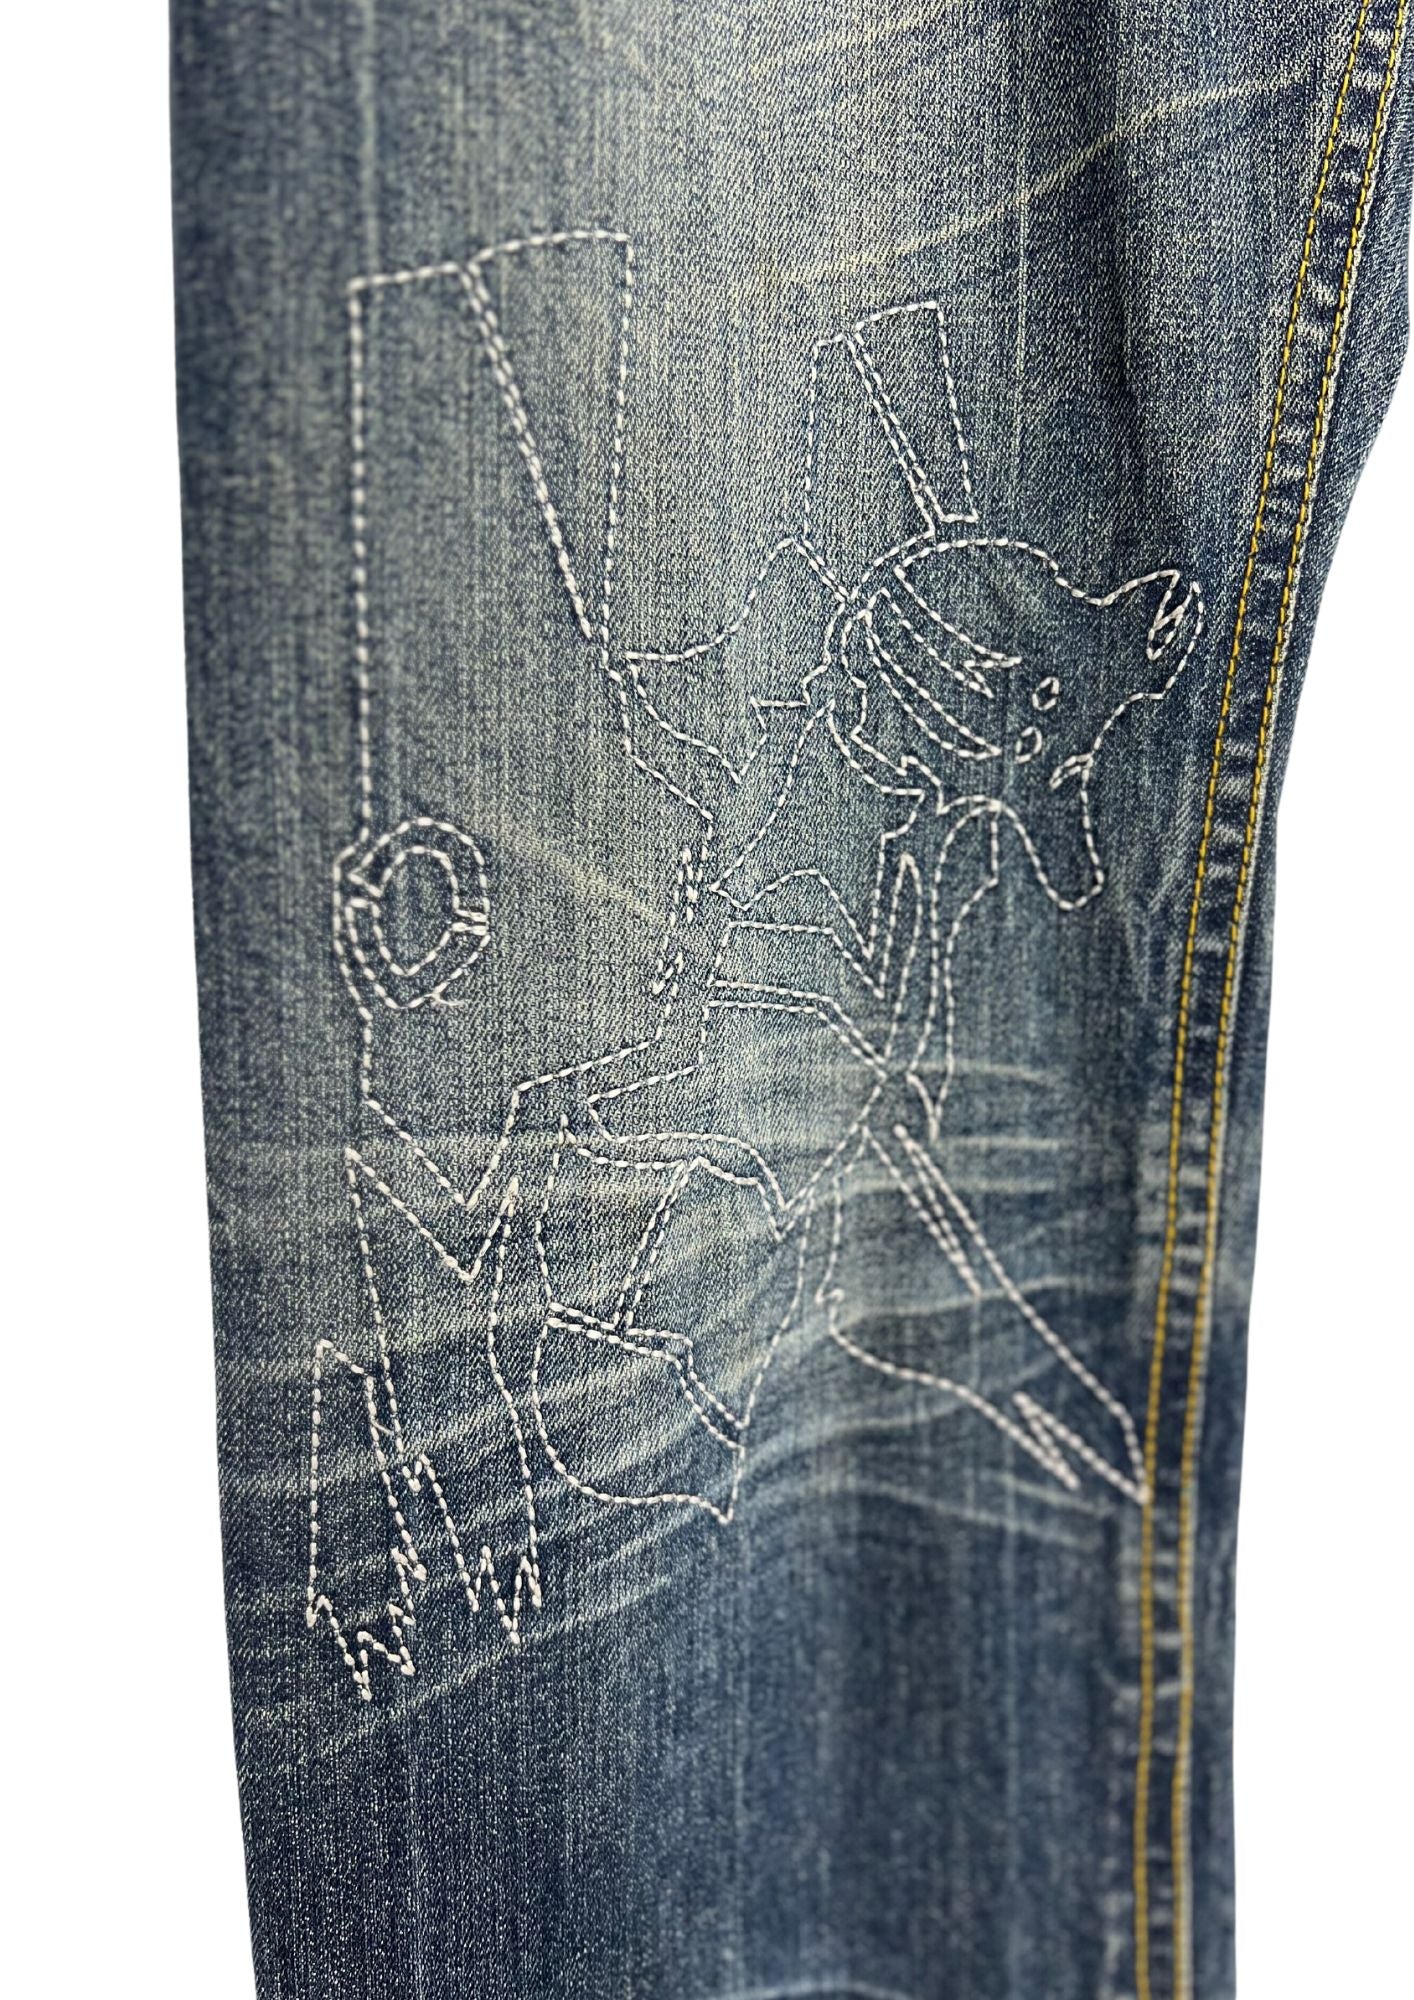 2010s Neon Genesis Evangelion x Nishiki Oriental Brand Type 02 Japanese Pattern Embroidered Jeans